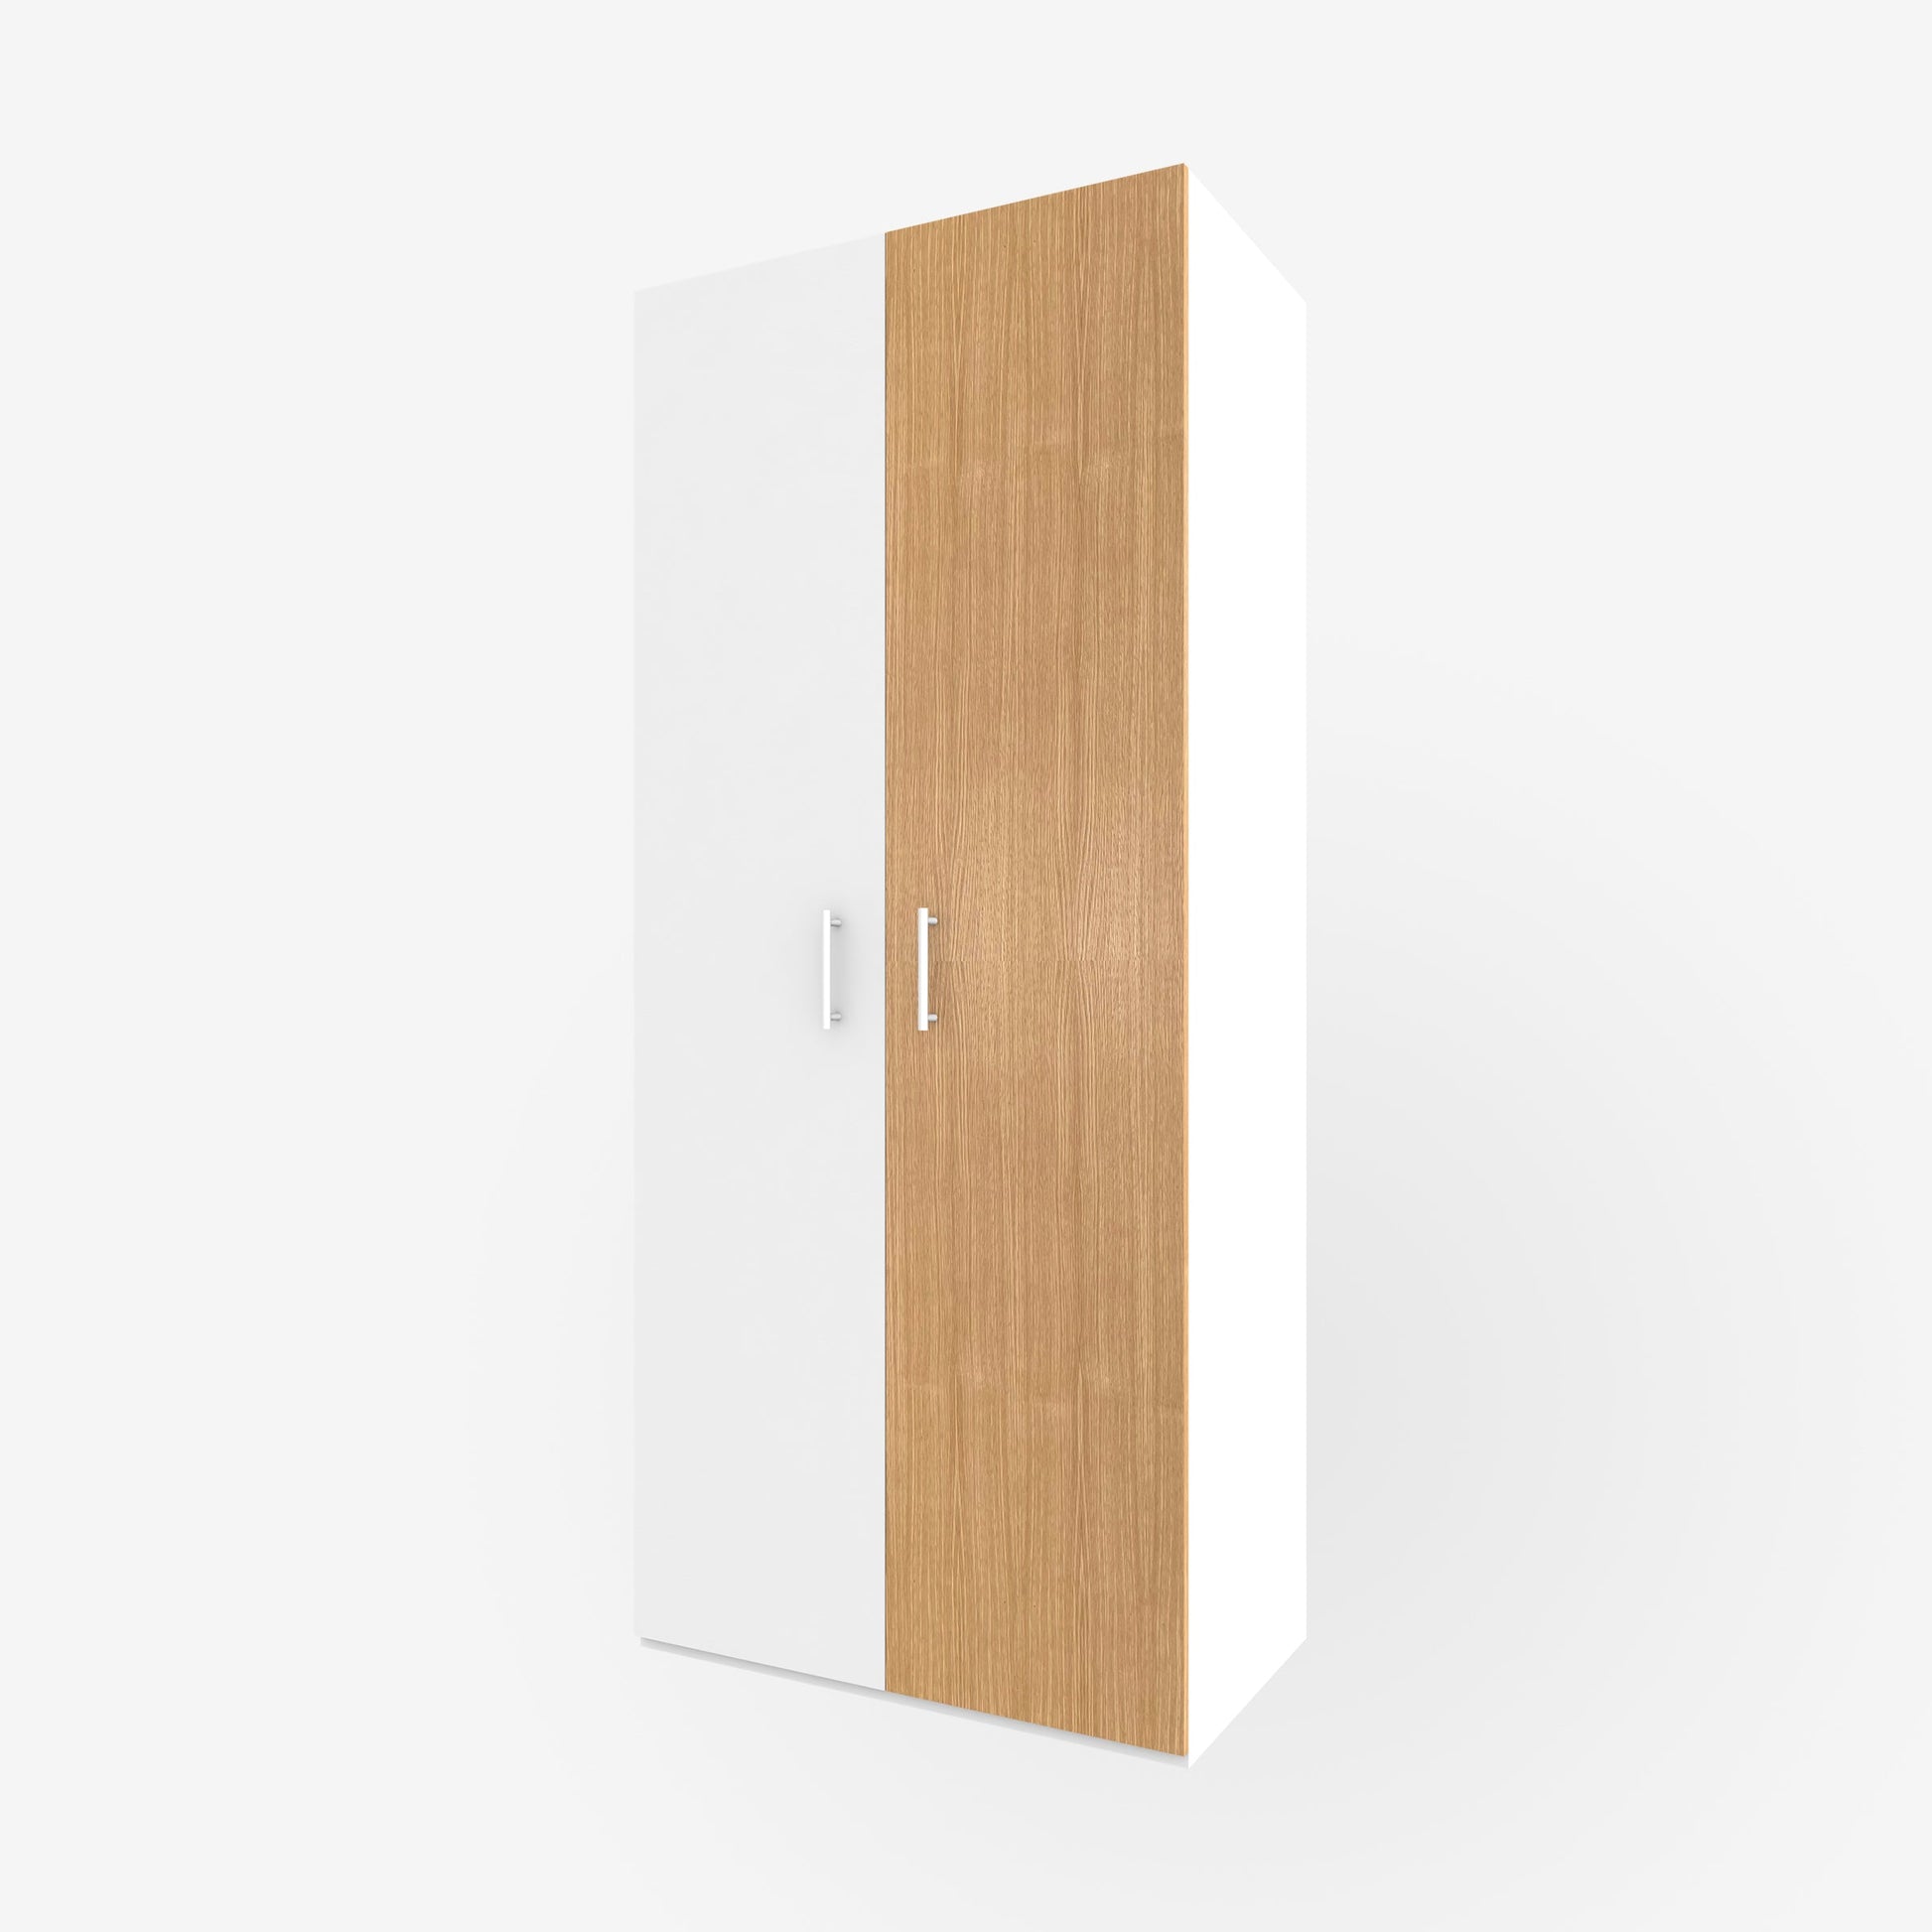 19.5" x 93" real wood veneer white oak slab door for Ikea or Swedeboxx pax closet cabinet